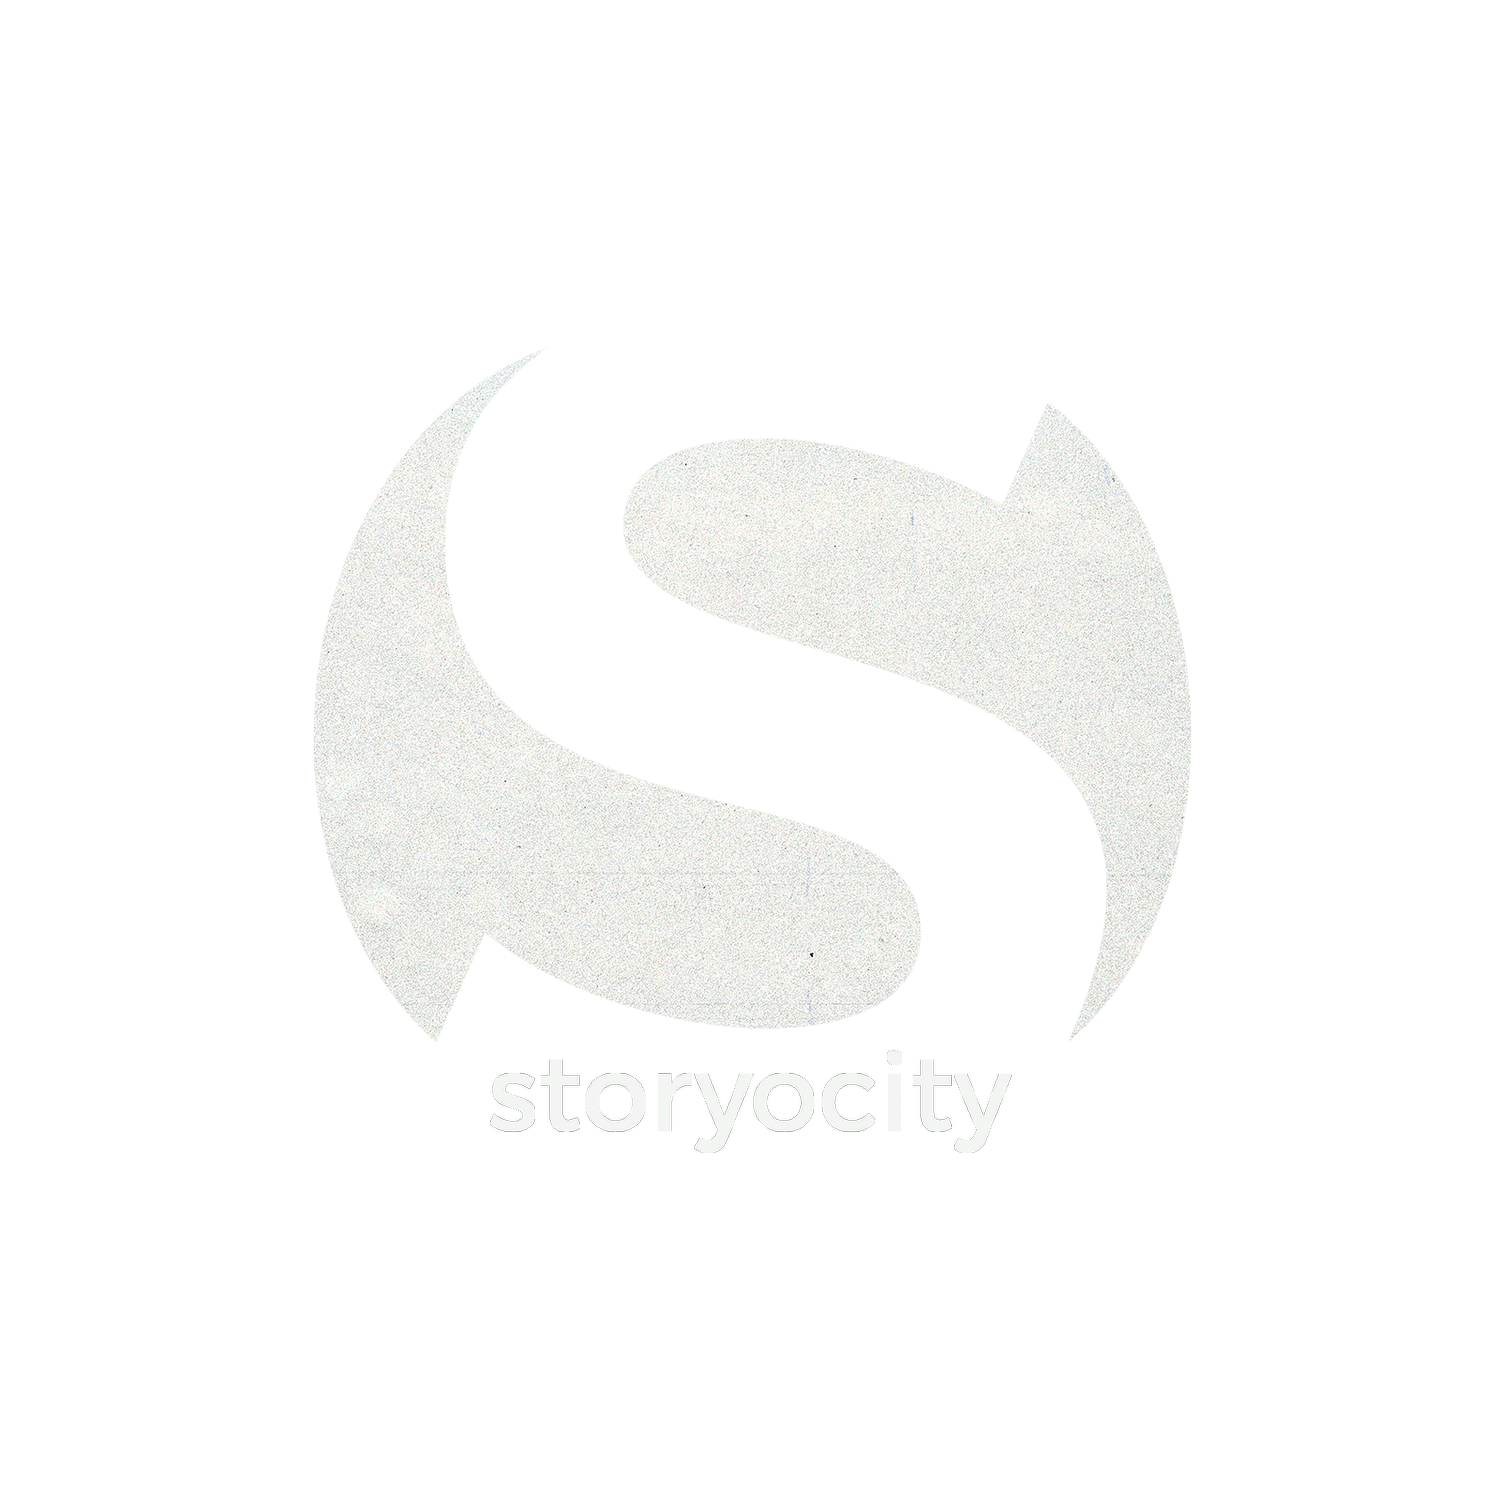 Storyocity: Direction &amp; Design